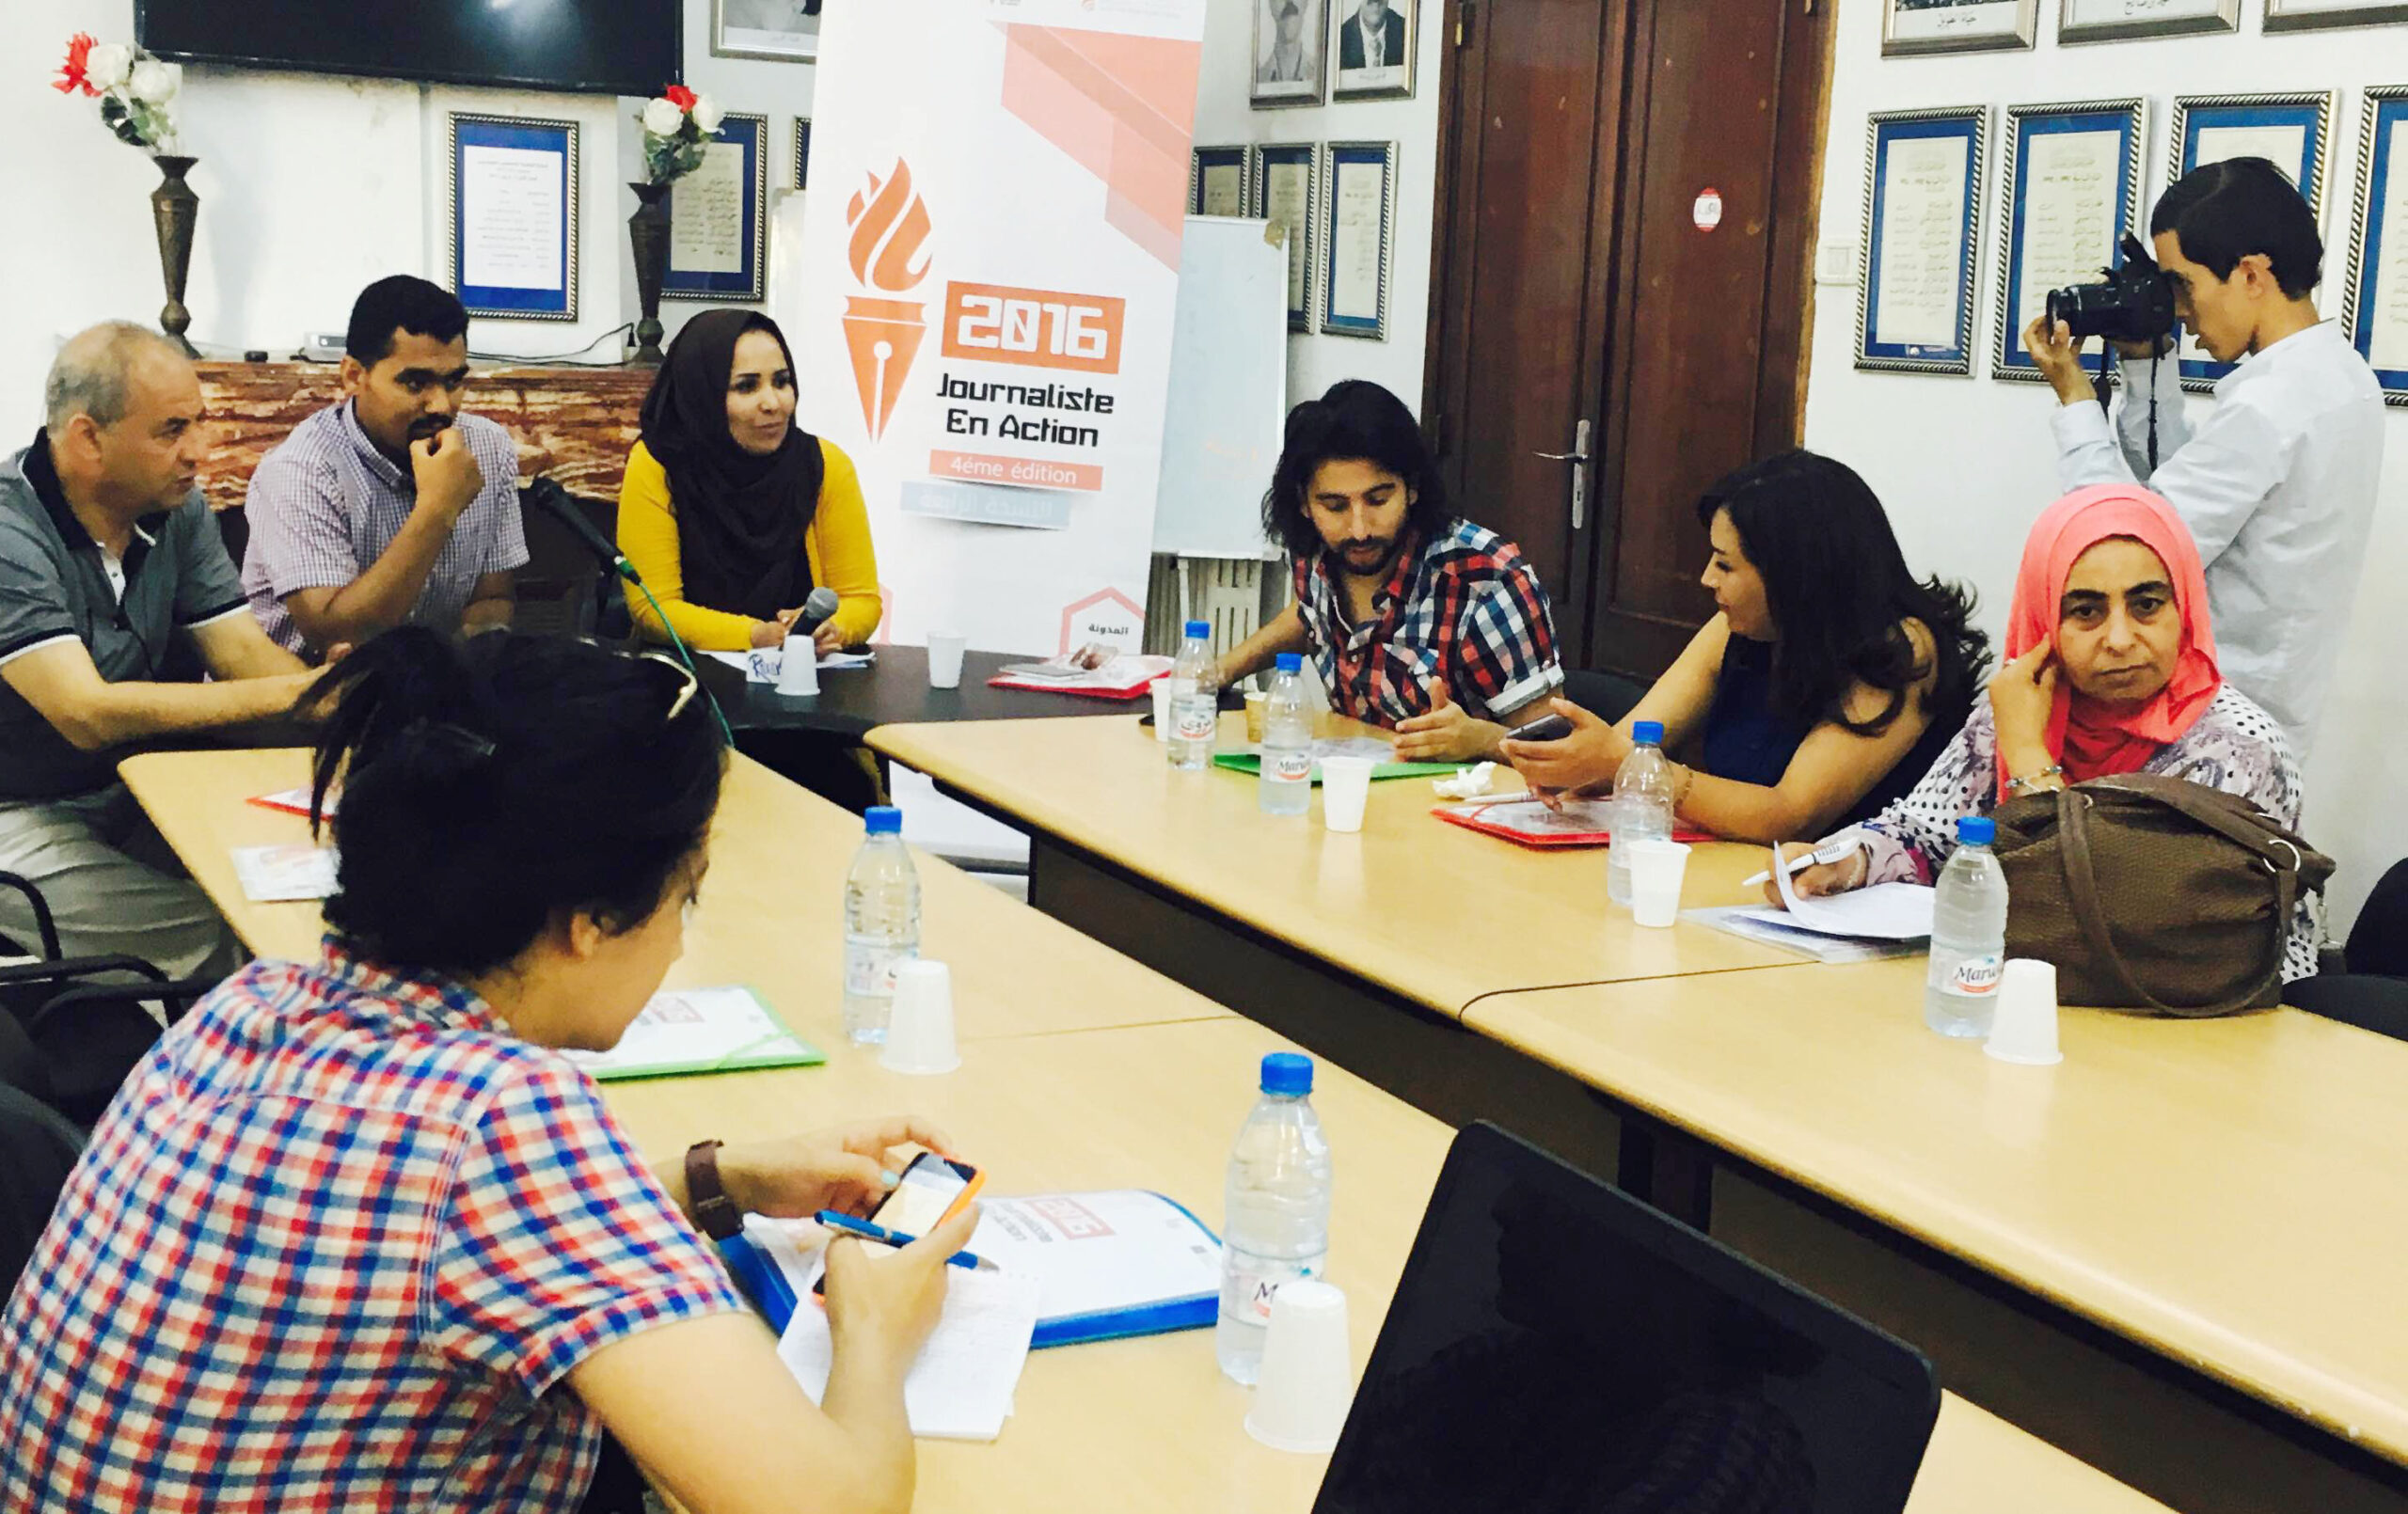 Tunezja – konkurs Journaliste en action 2016 ogłoszony